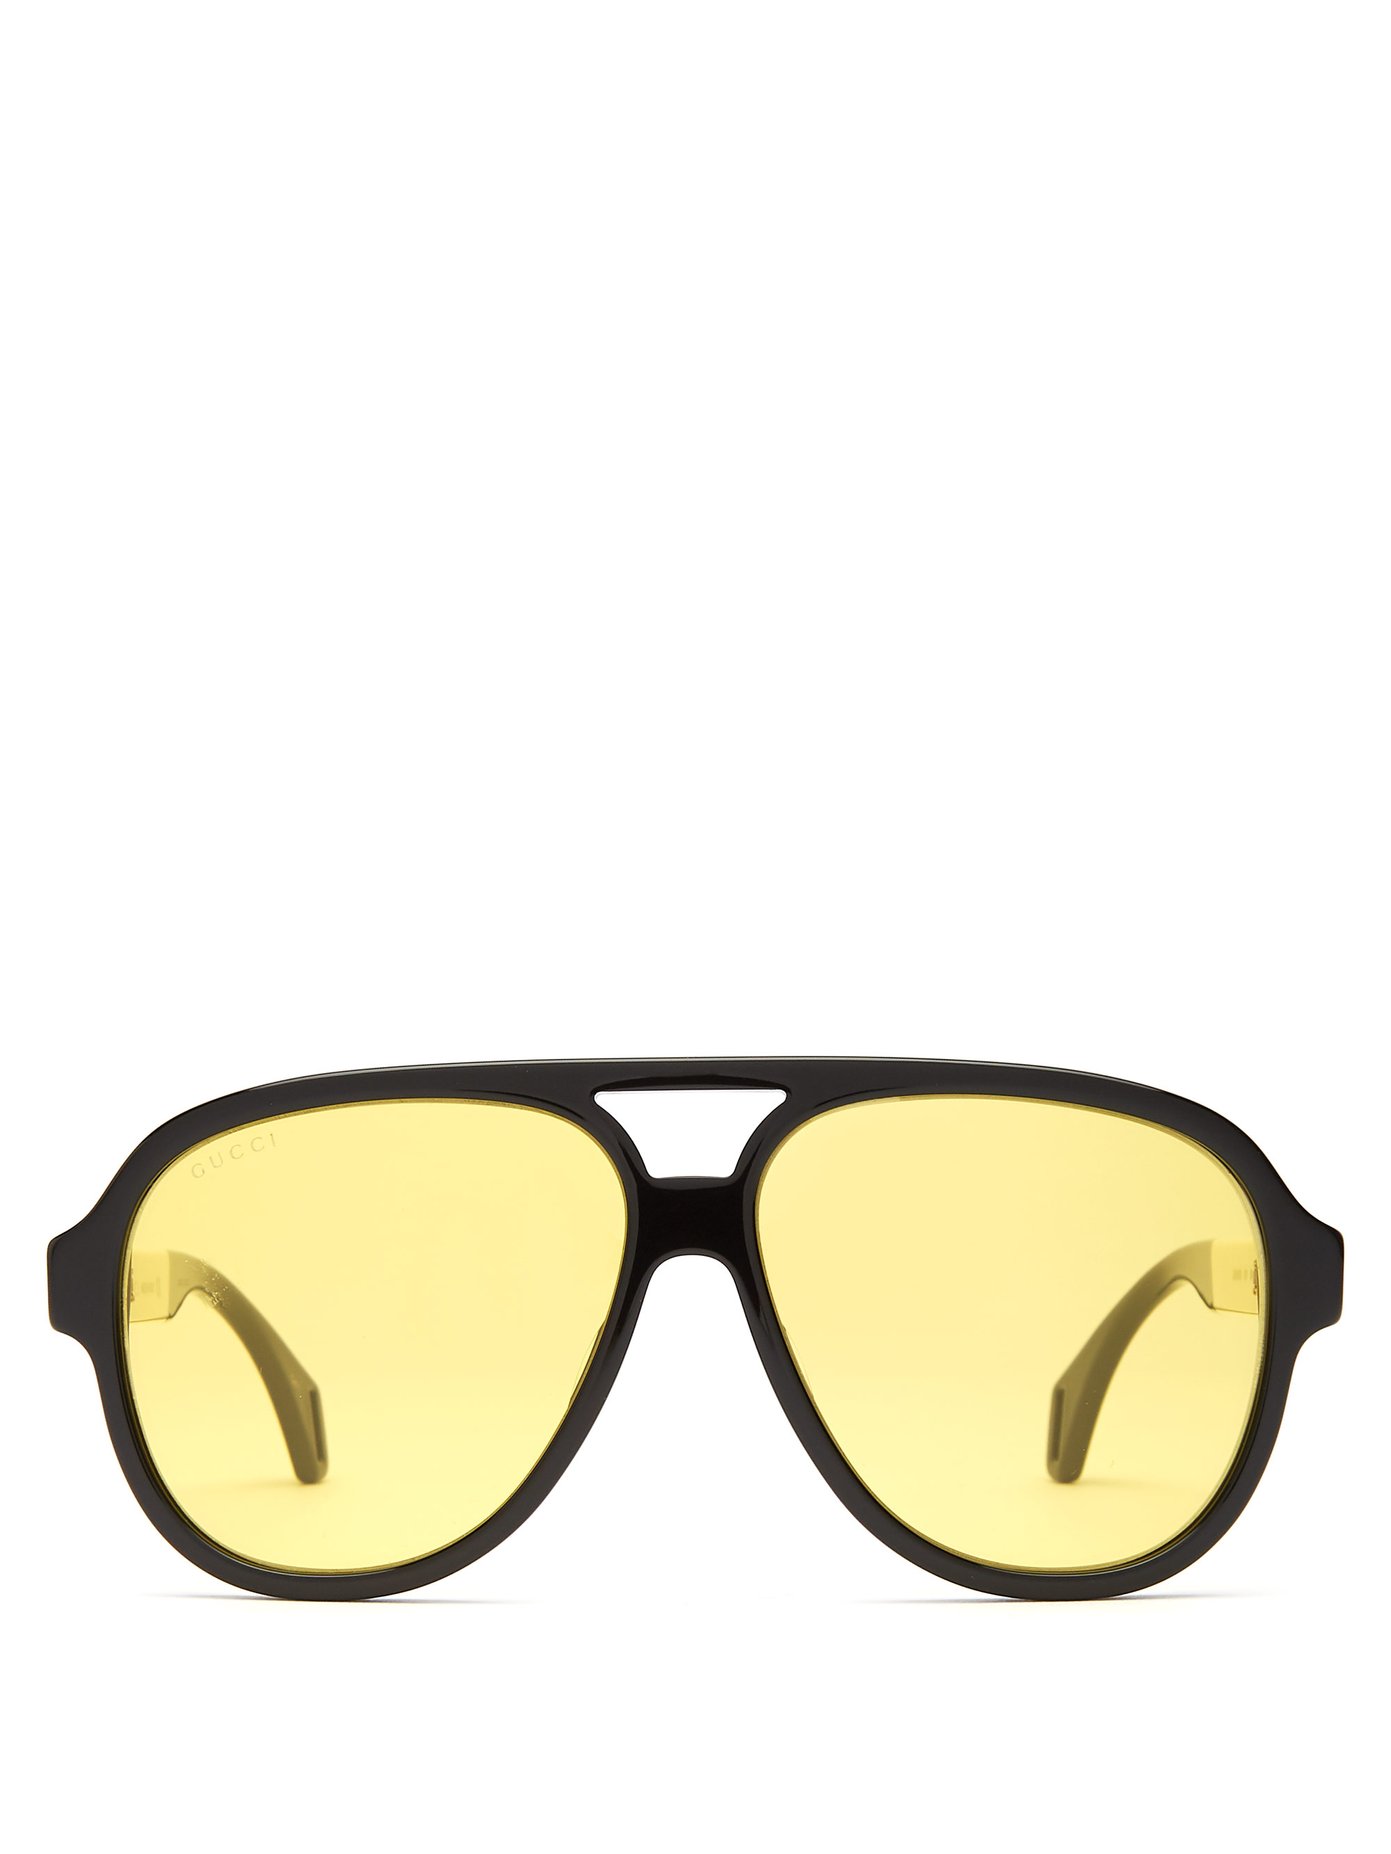 gucci sunglasses yellow lens